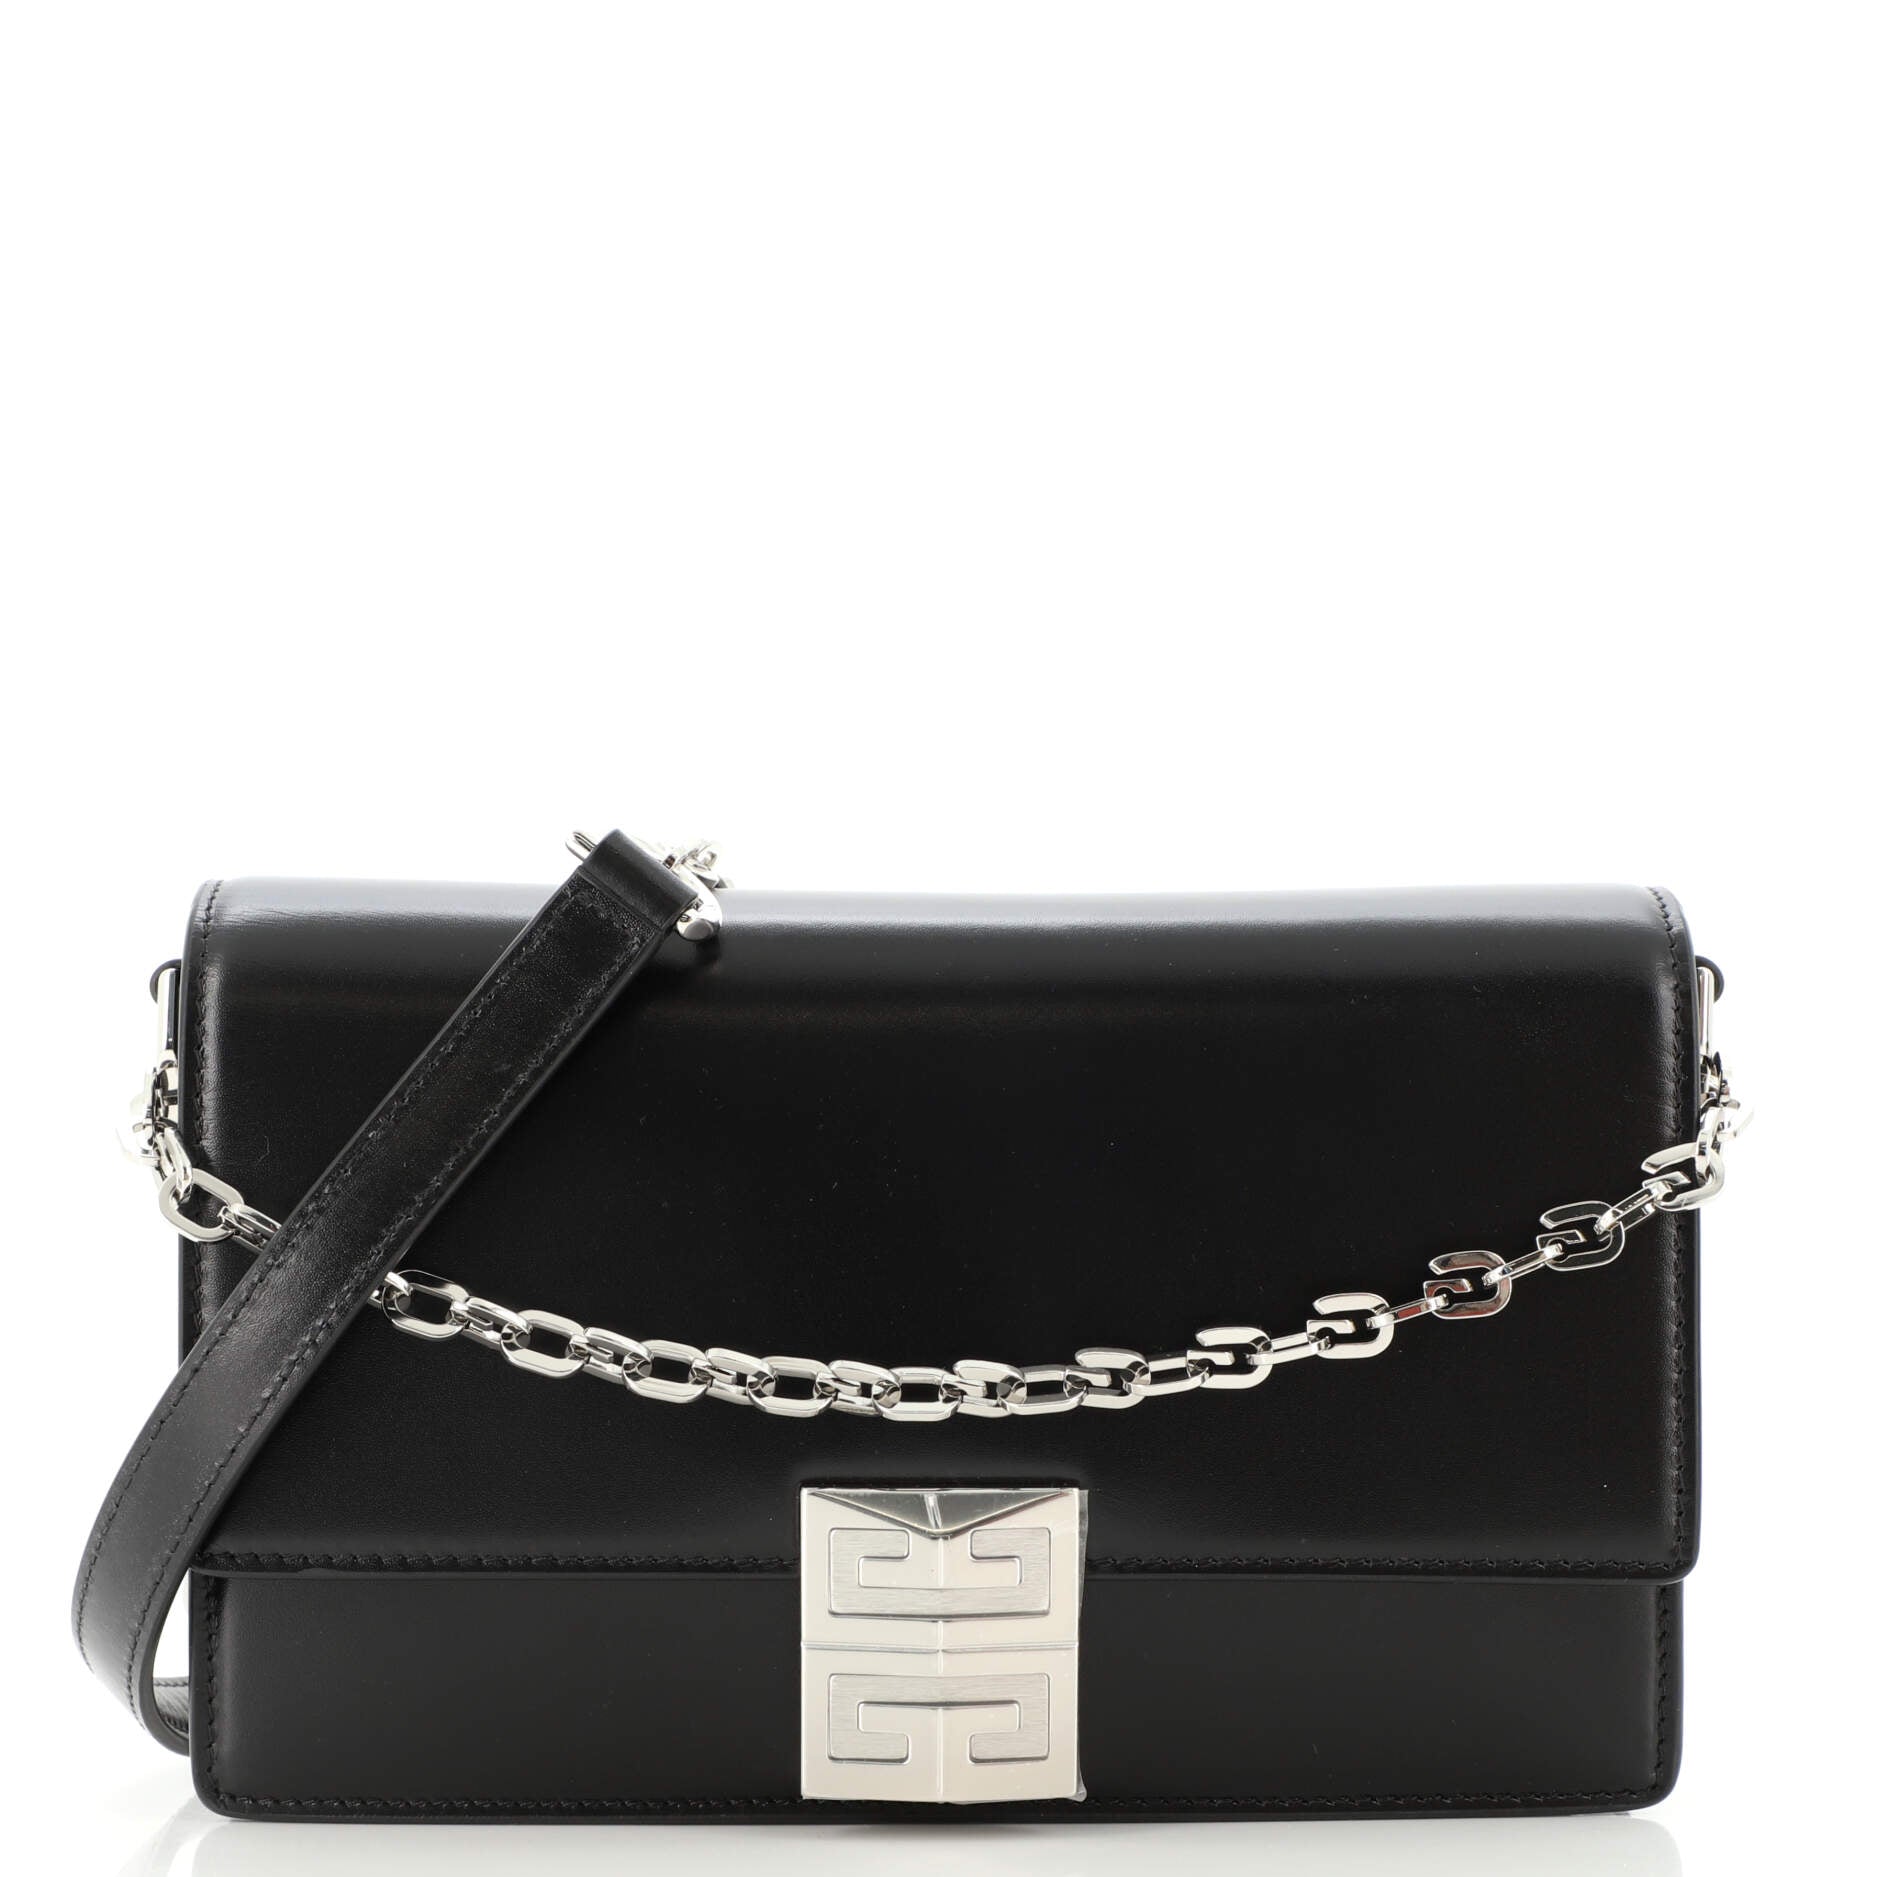 Givenchy Medium 4G Chain Leather Shoulder Bag